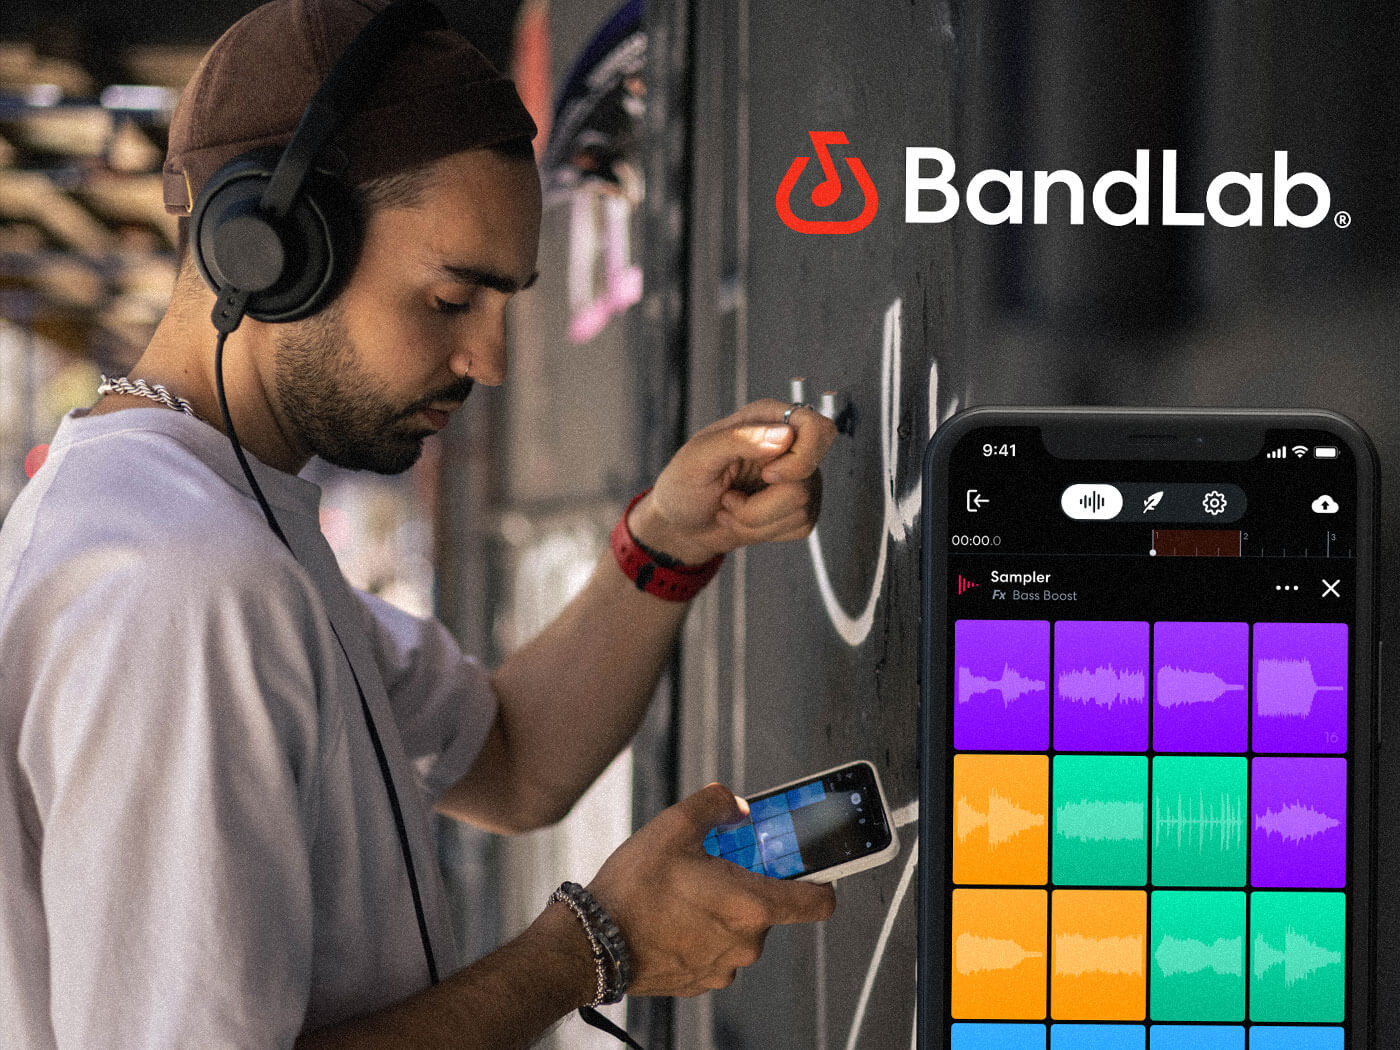 BandLab Series B Funding